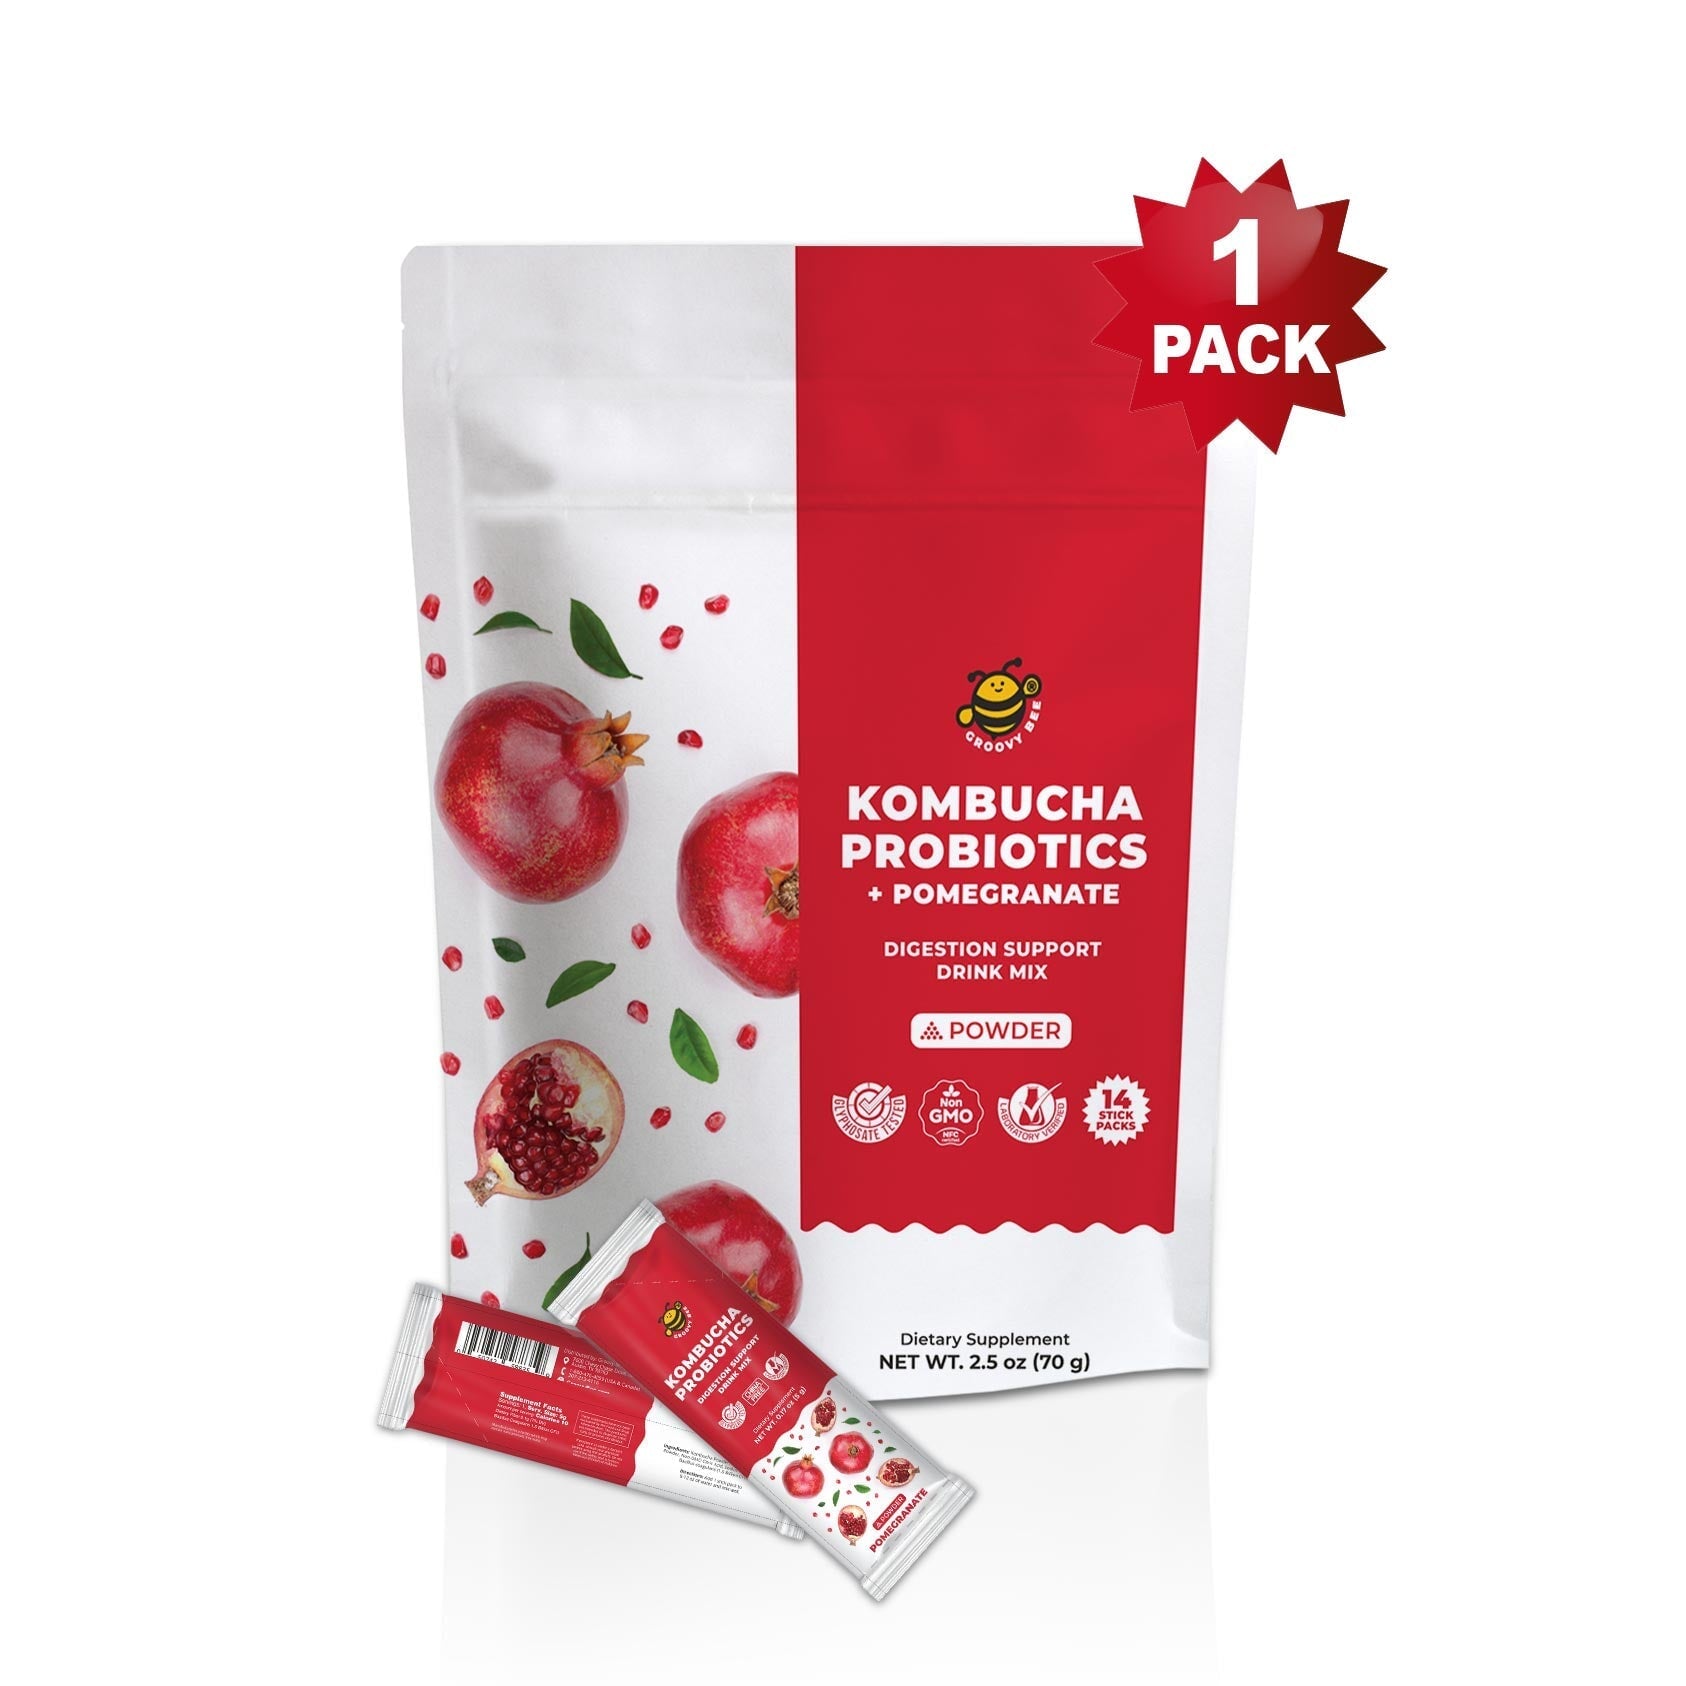 Kombucha Probiotics + Pomegranate Powder (14 counts) 2.5 oz (70g) Probiotics Brighteon Store 